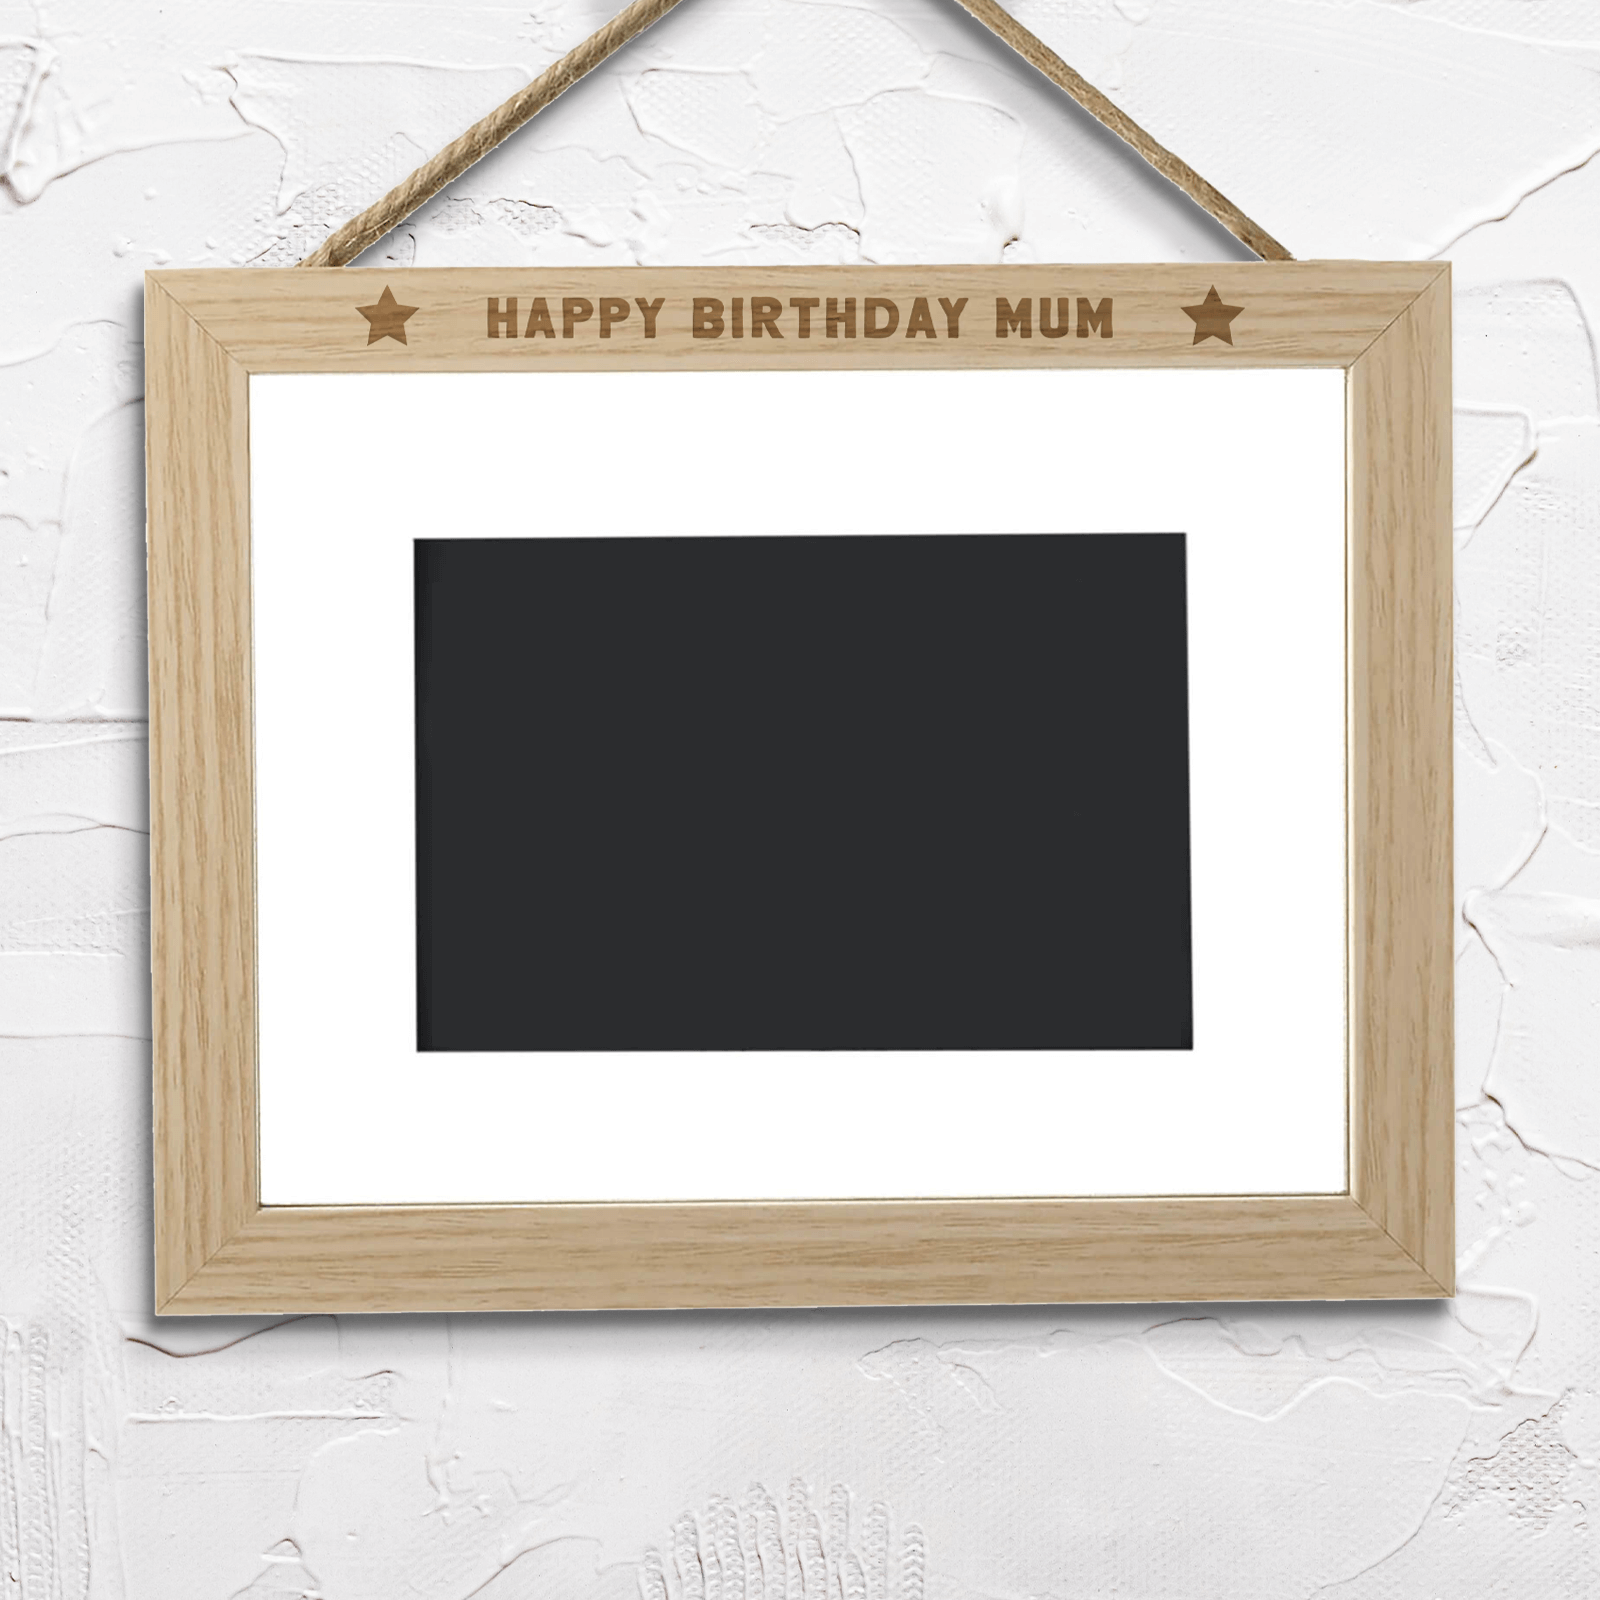 Happy Birthday Mum Landscape Frame - Large - 24x33cm